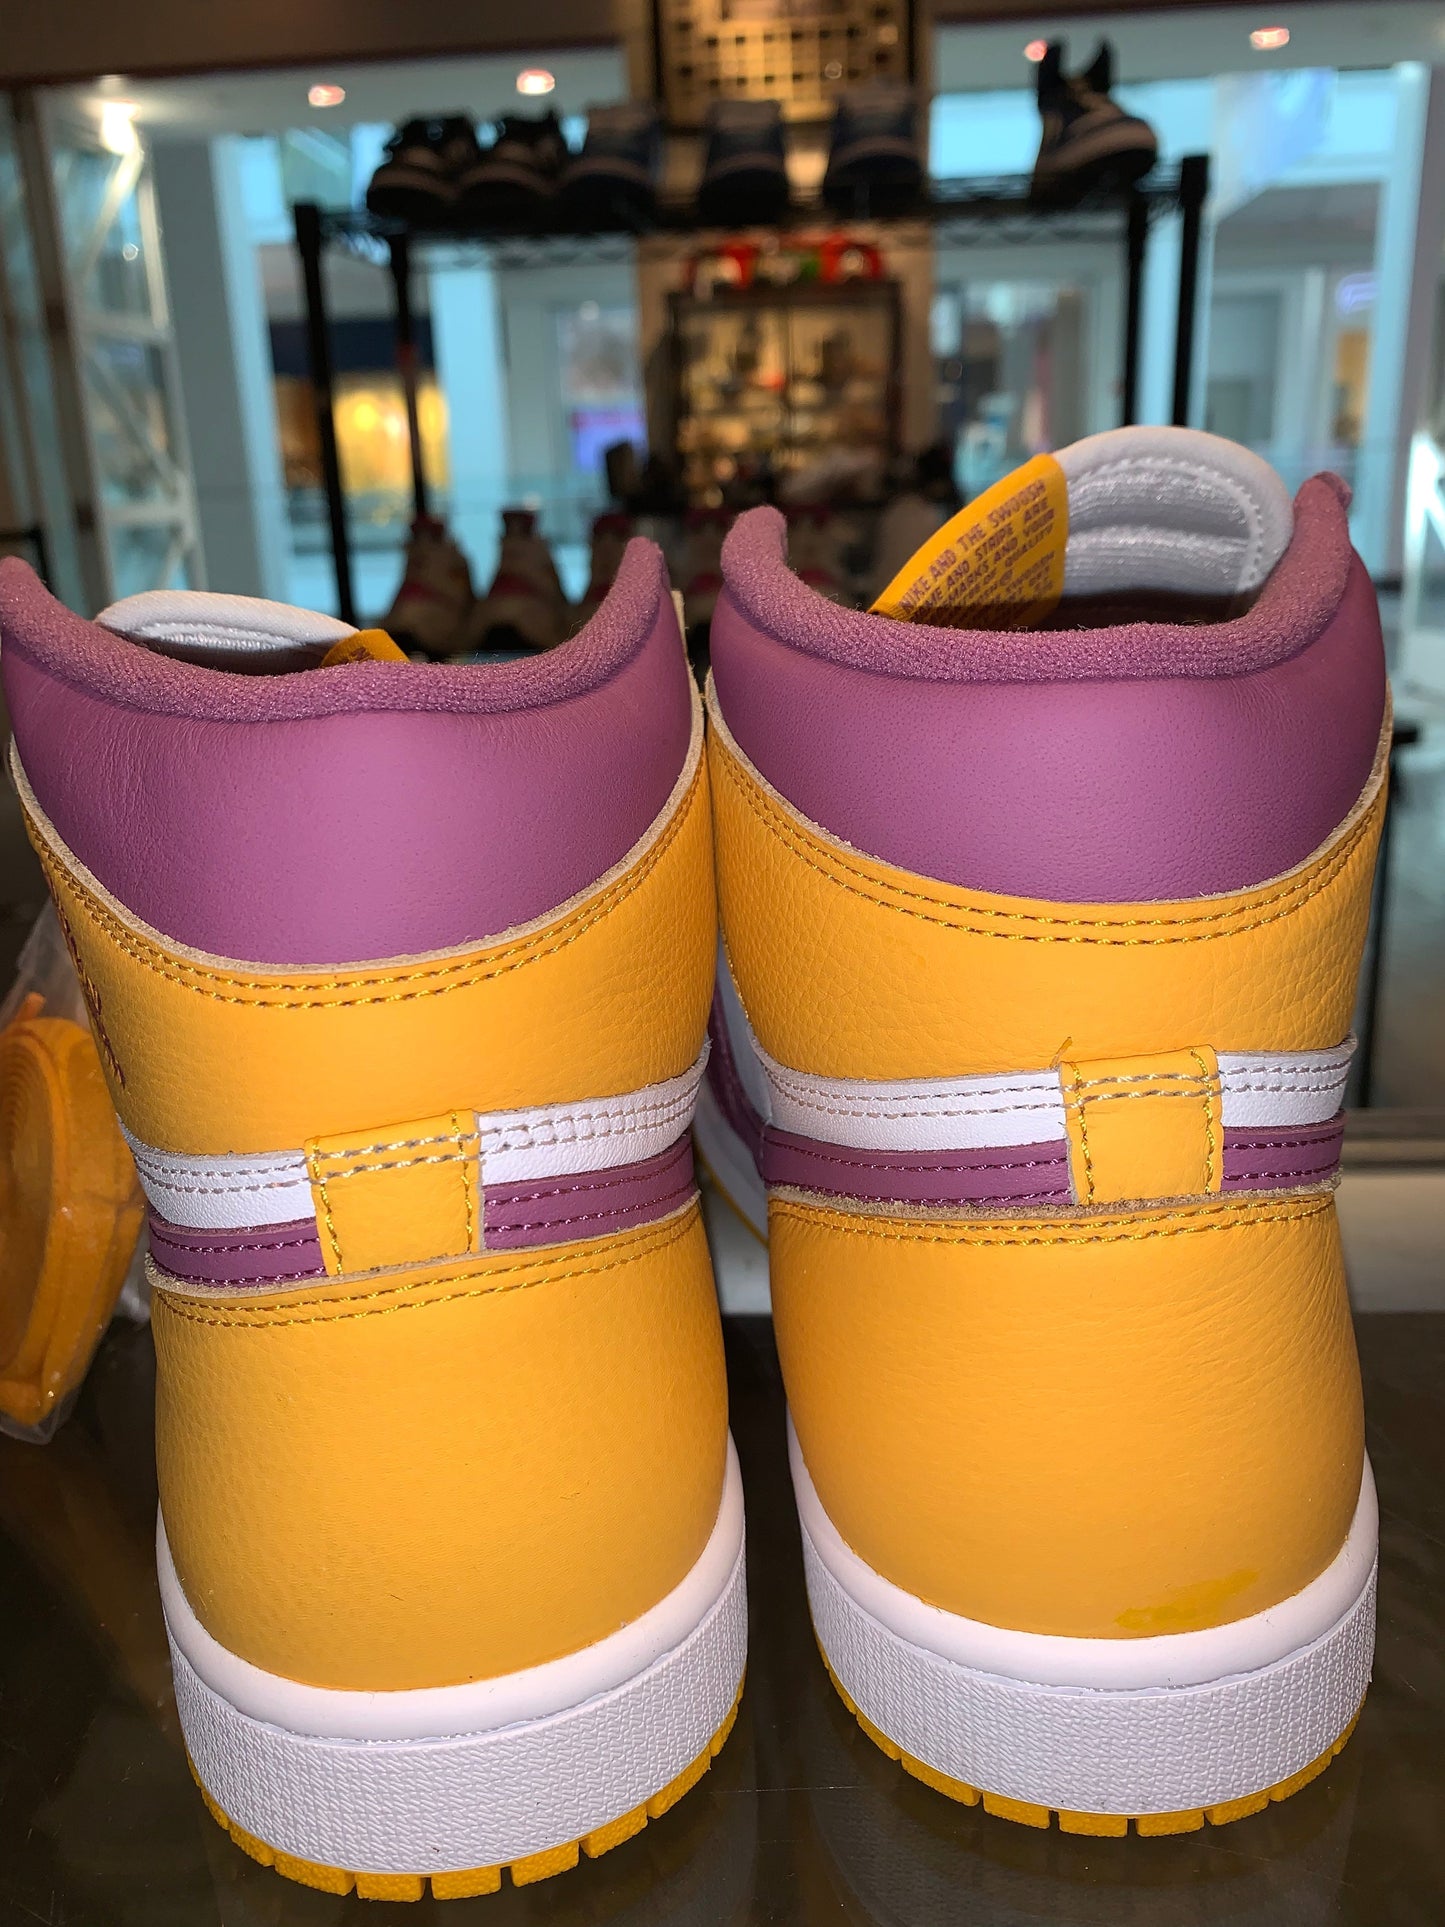 Size 9.5 Air Jordan 1 “Brotherhood” Brand New (Mall)